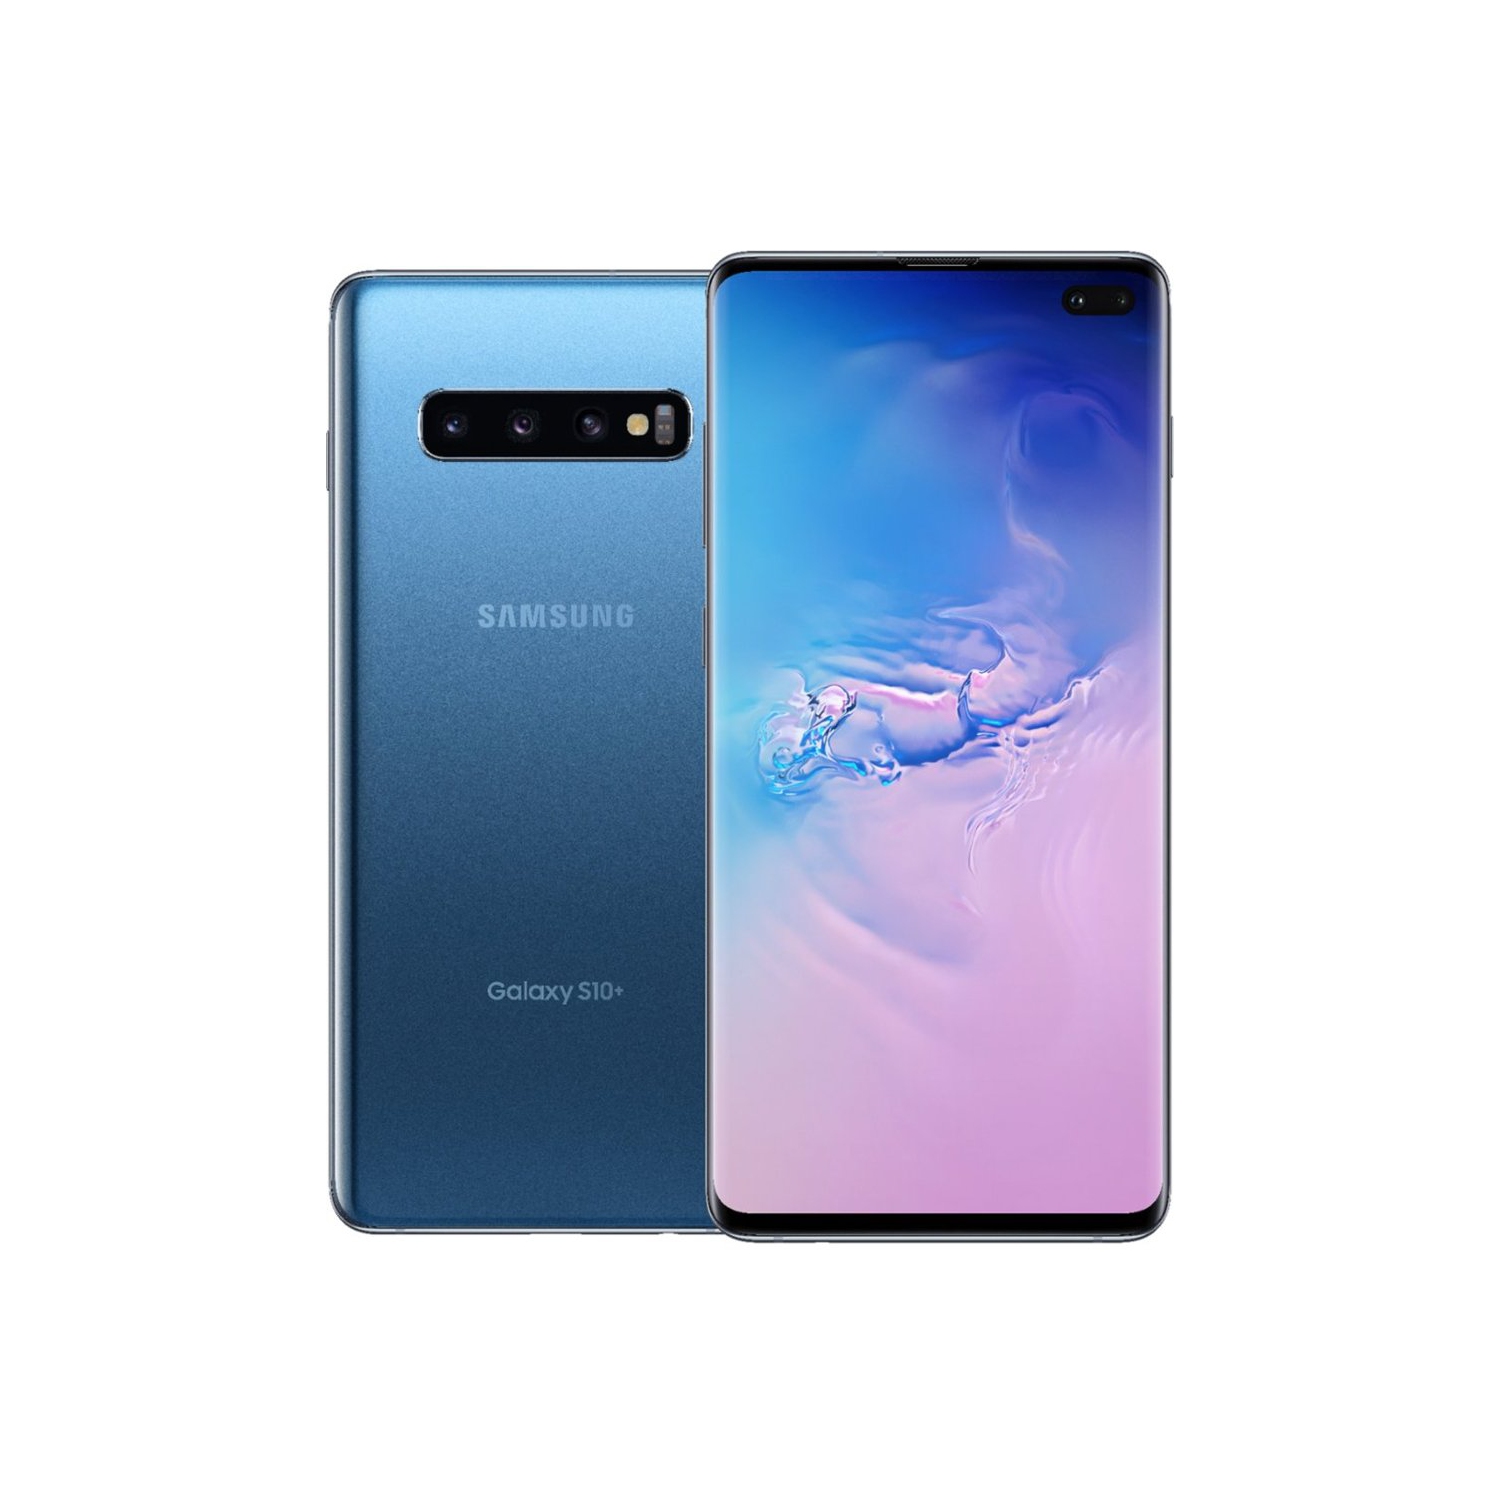 Galaxy S10 Plus 128GB Smartphone - Prism Blue - Unlocked